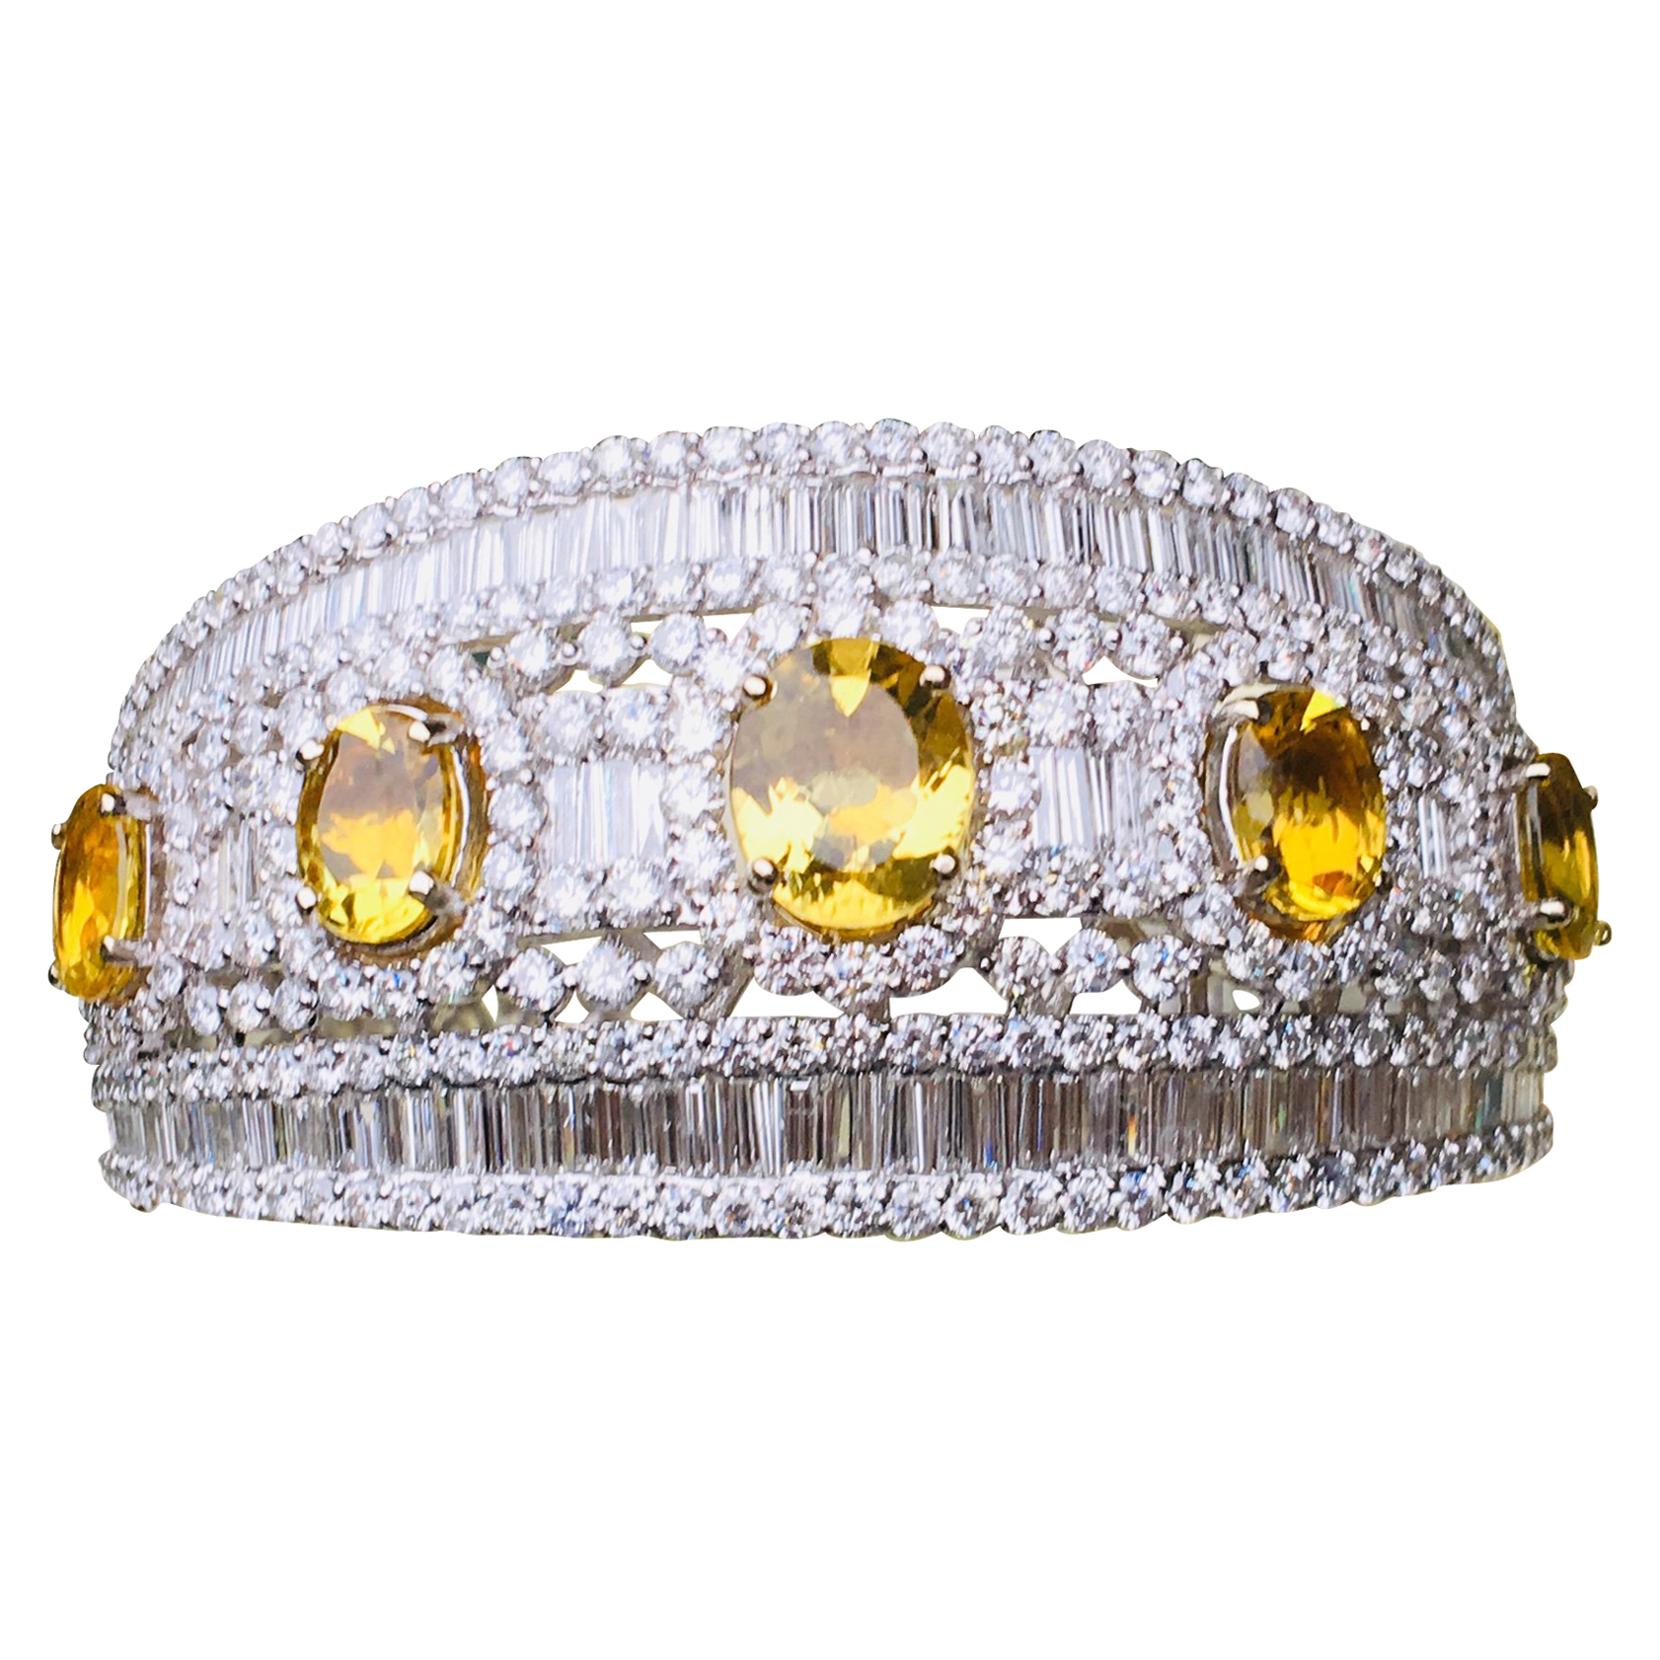 37 Carat Diamond and Yellow Topaz 18 Karat Hinged Bangle Bracelet